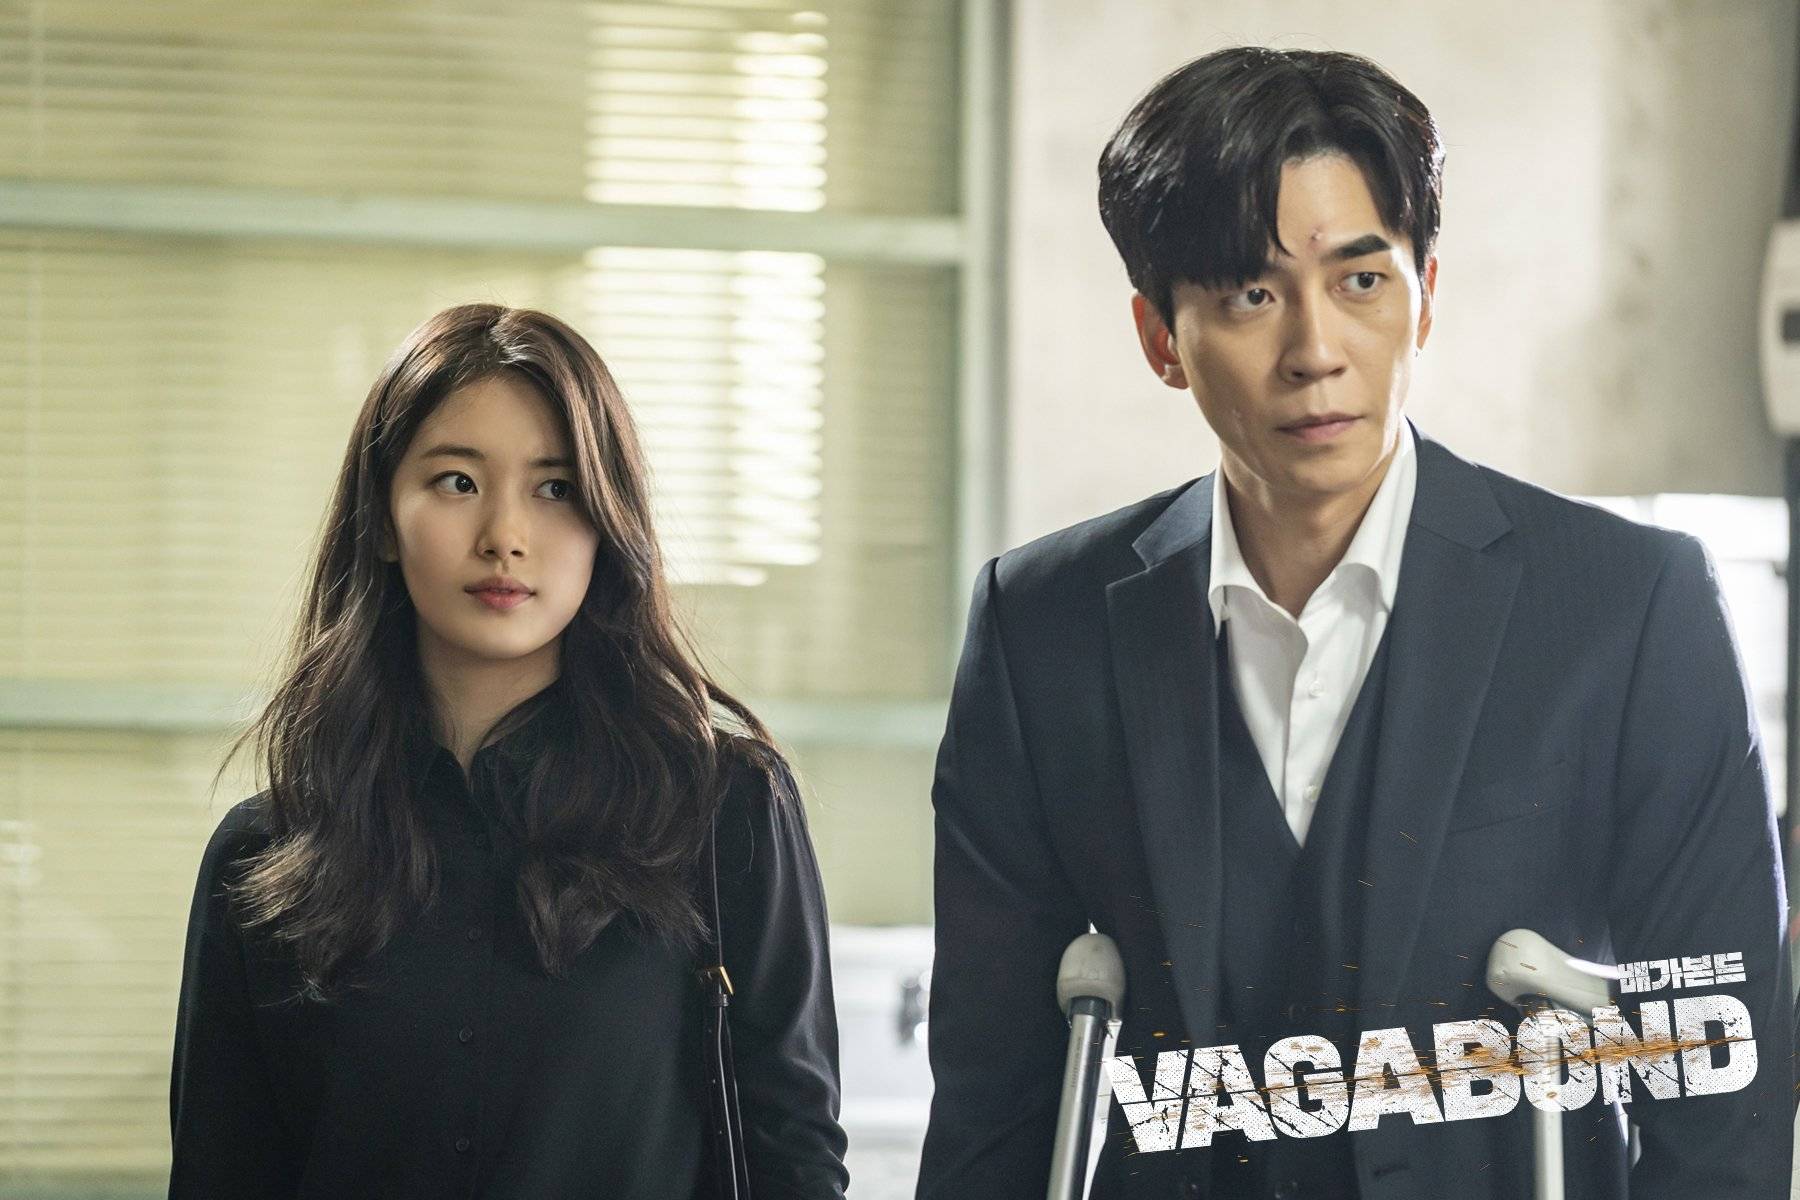 Undskyld mig Onset på den anden side, Photos] New Stills and Behind the Scenes Images Added for the Korean Drama ' Vagabond' @ HanCinema